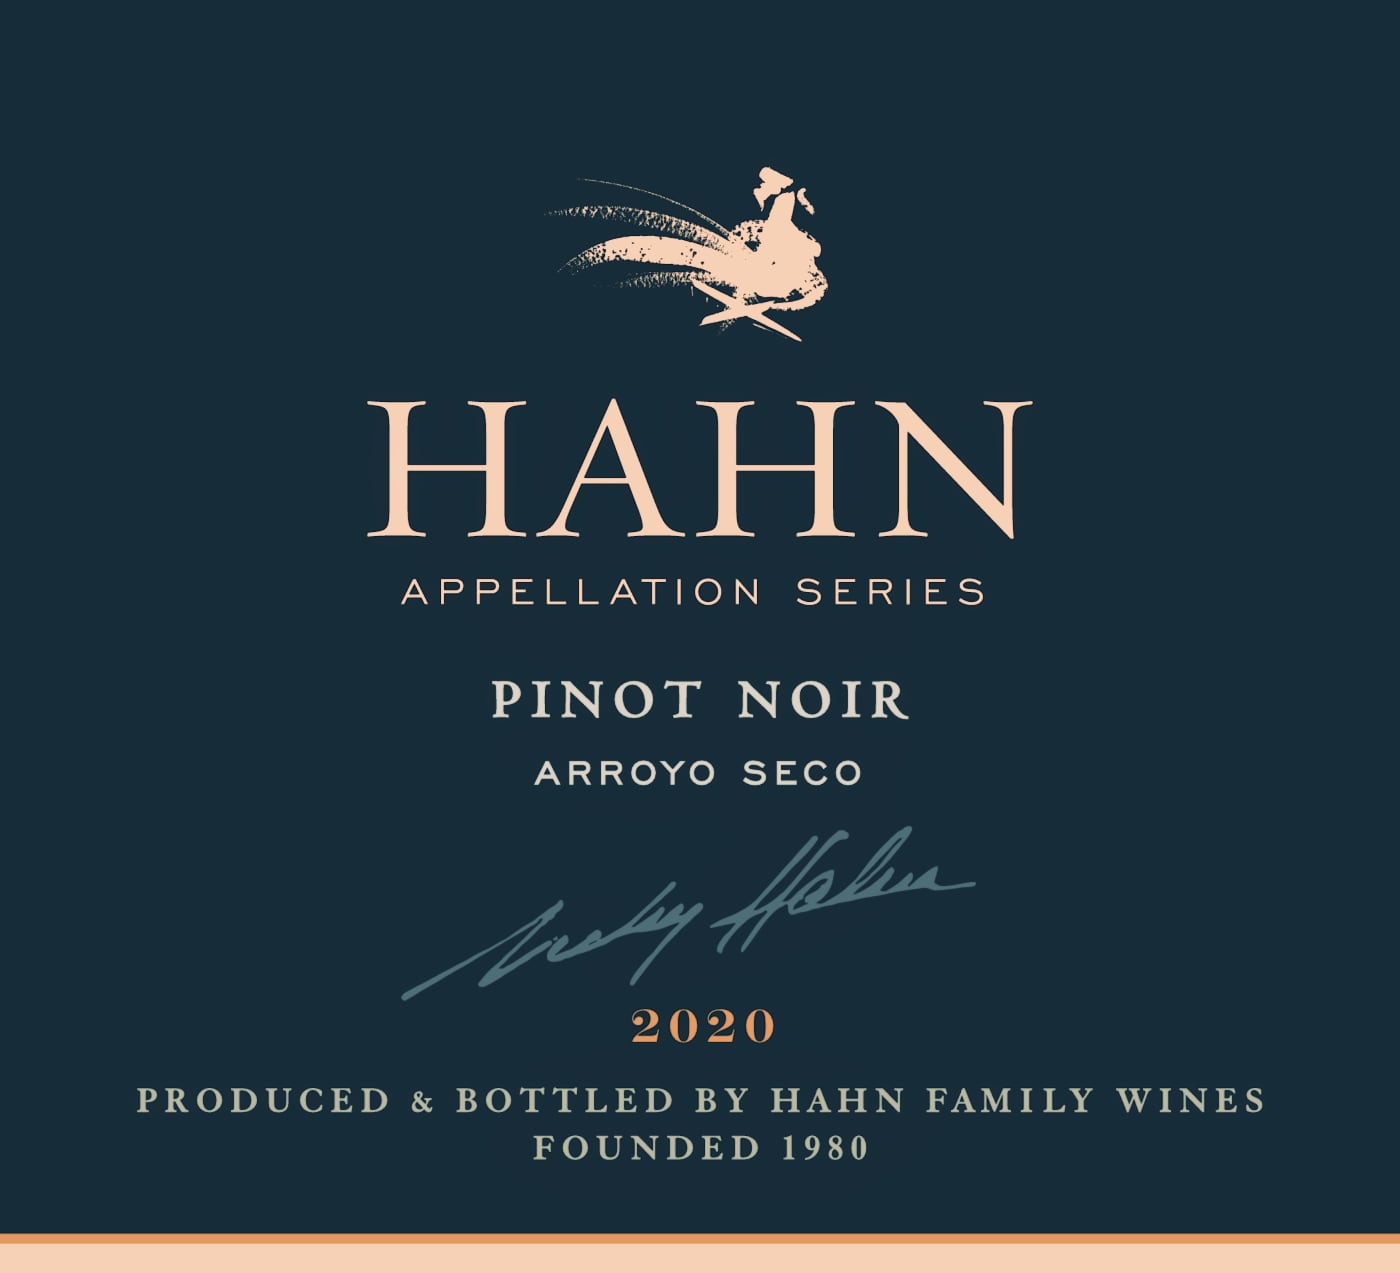 Hahn Appellation Series Arroyo Seco Pinot Noir 2020